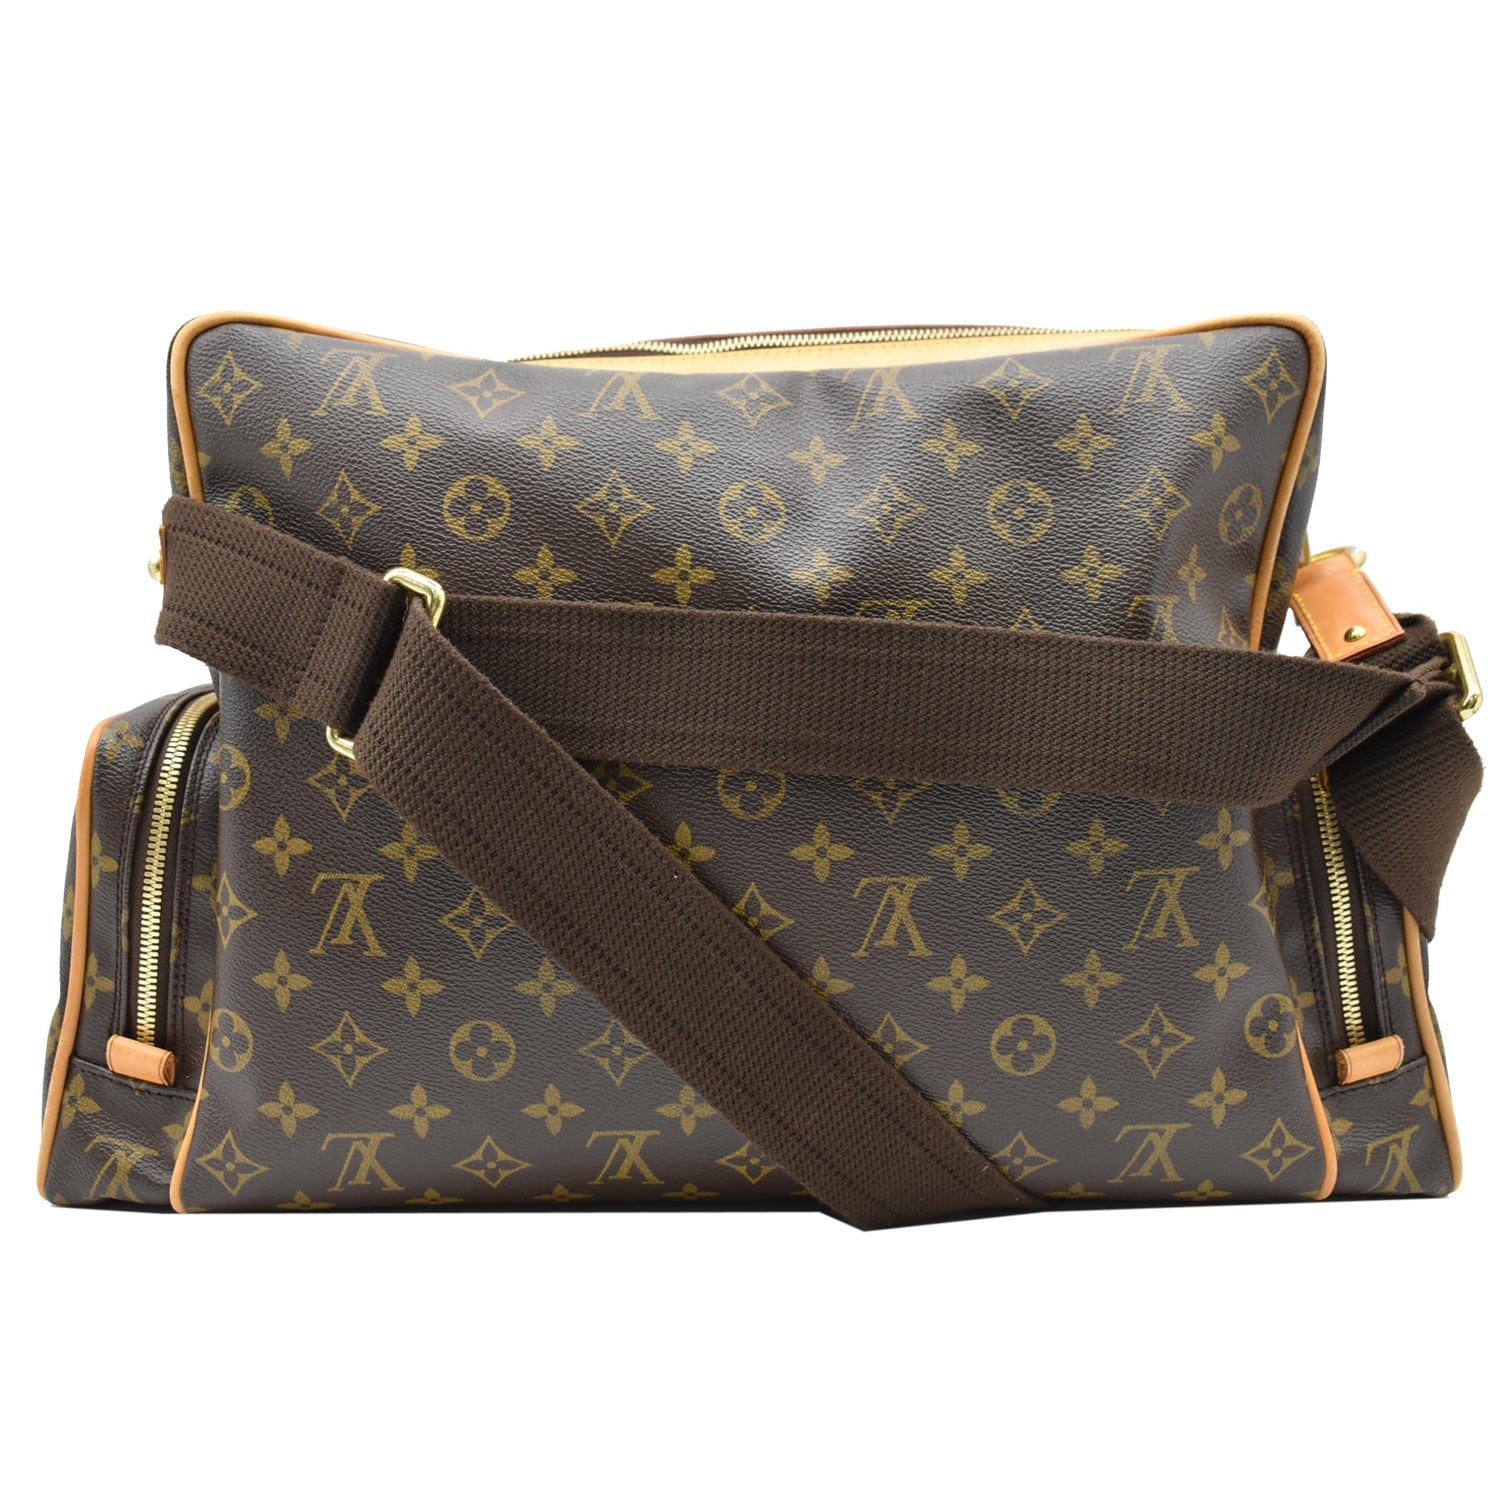 Louis Vuitton, Bags, Authentic Lv Diaper Bag Brown